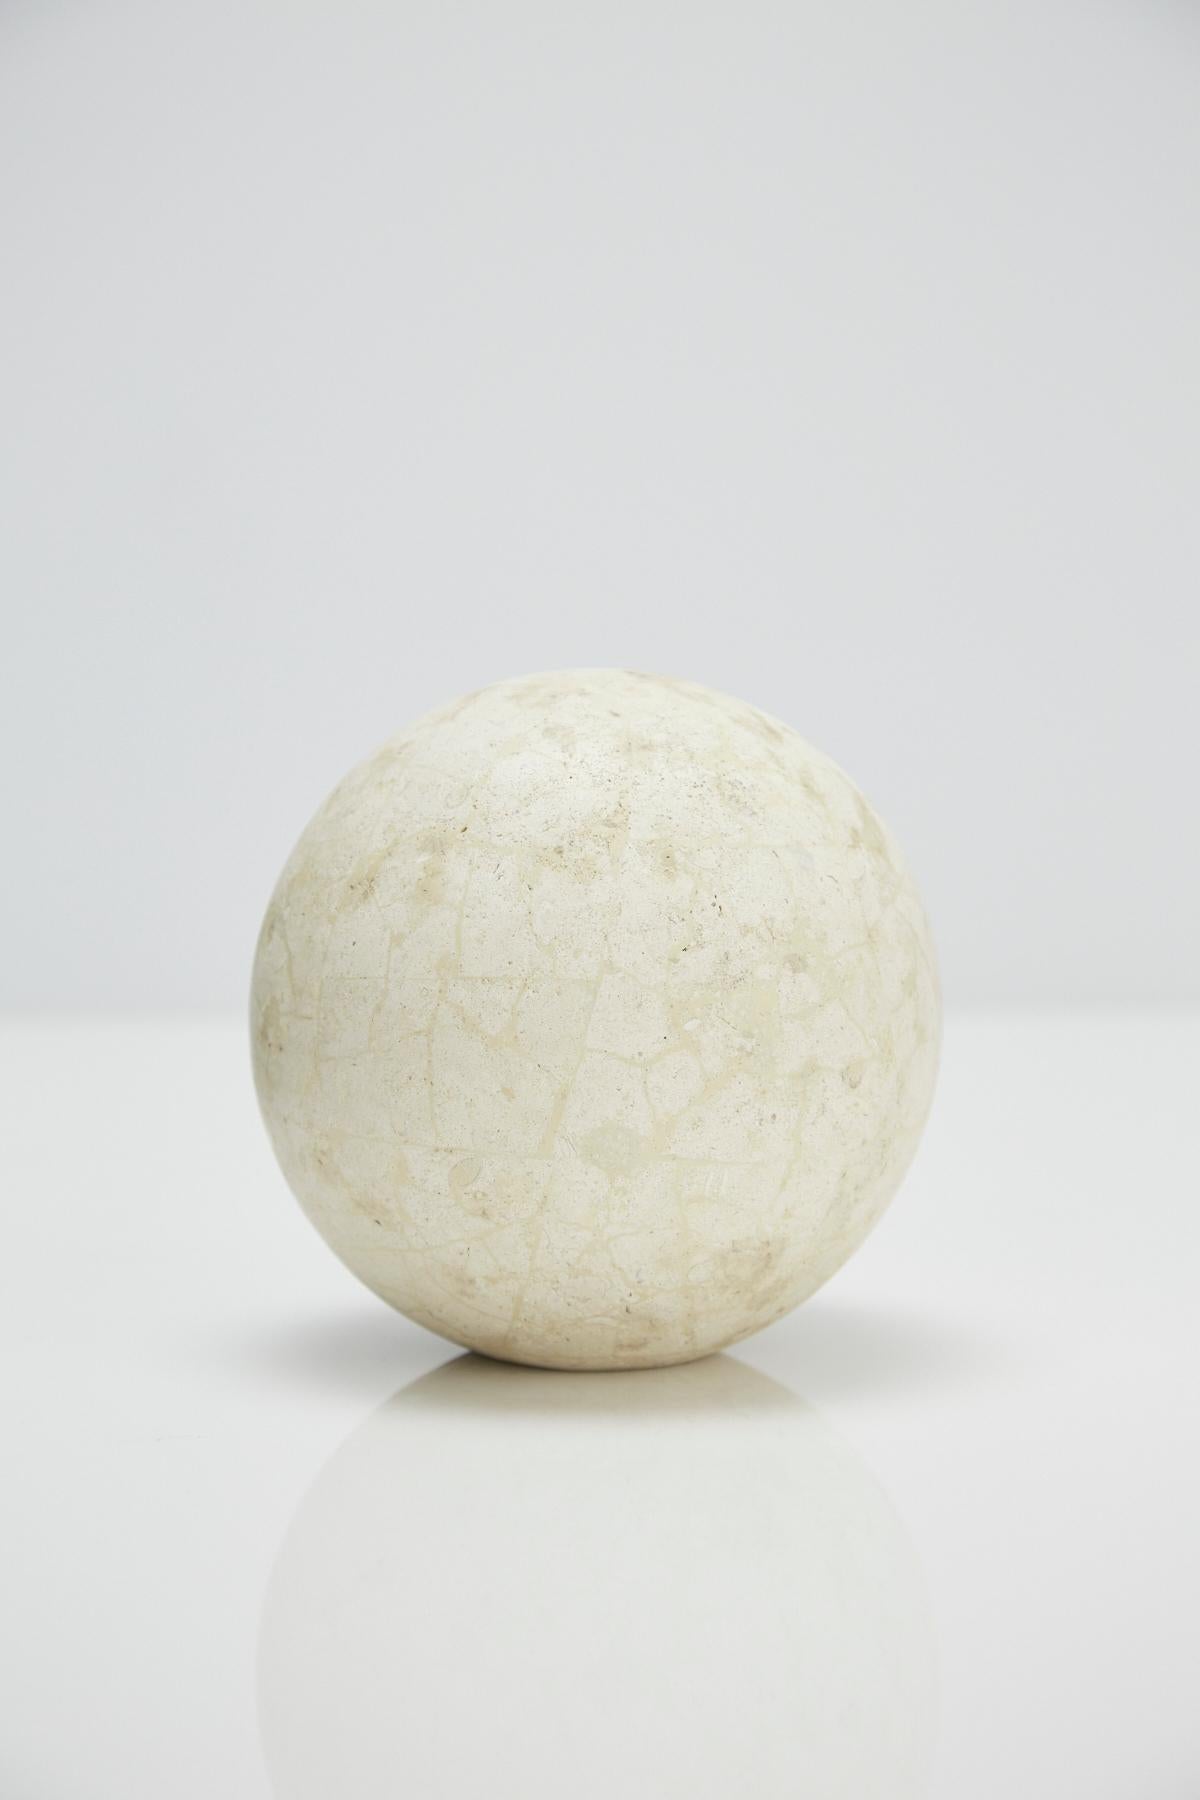 Philippine Tessellated Matte Mactan Stone Sphere - 5.5